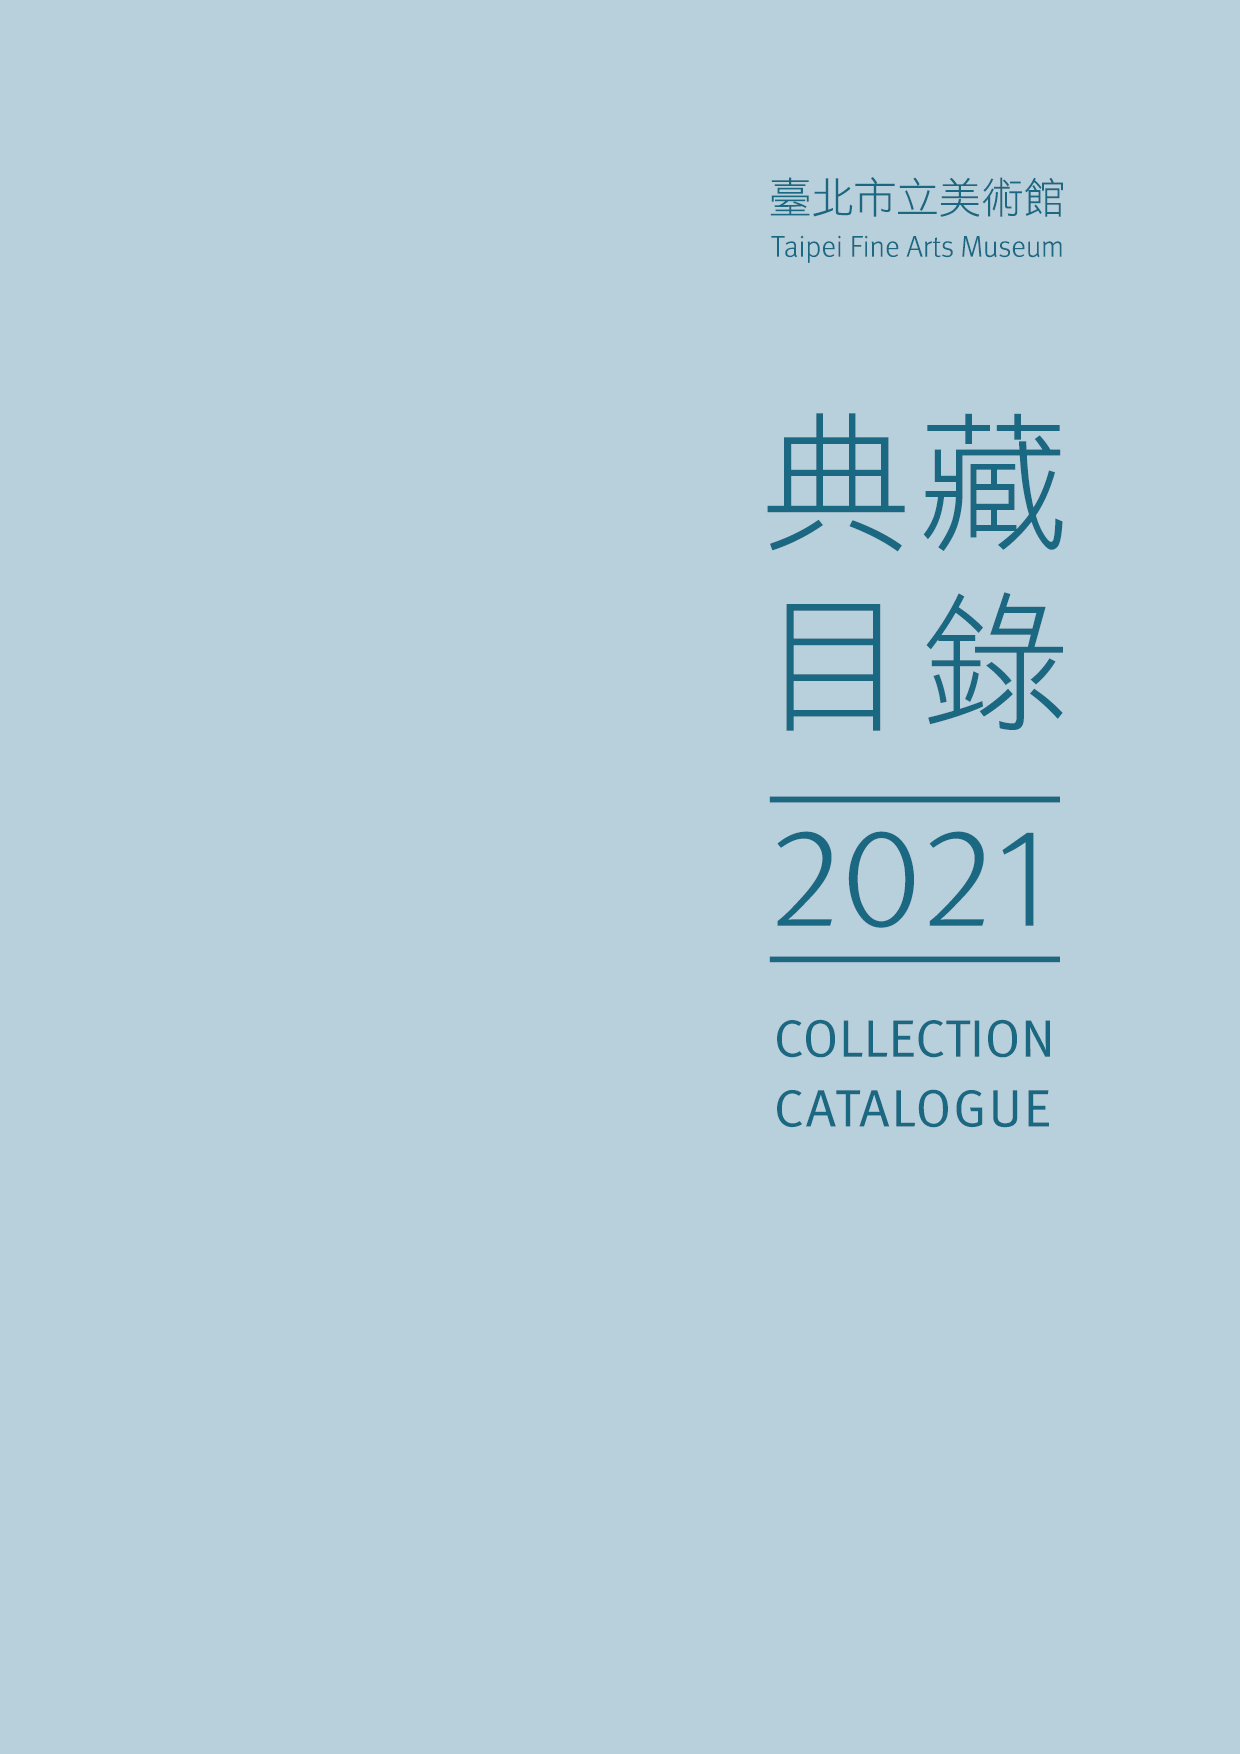 Collection Catalogue 2021 的圖說